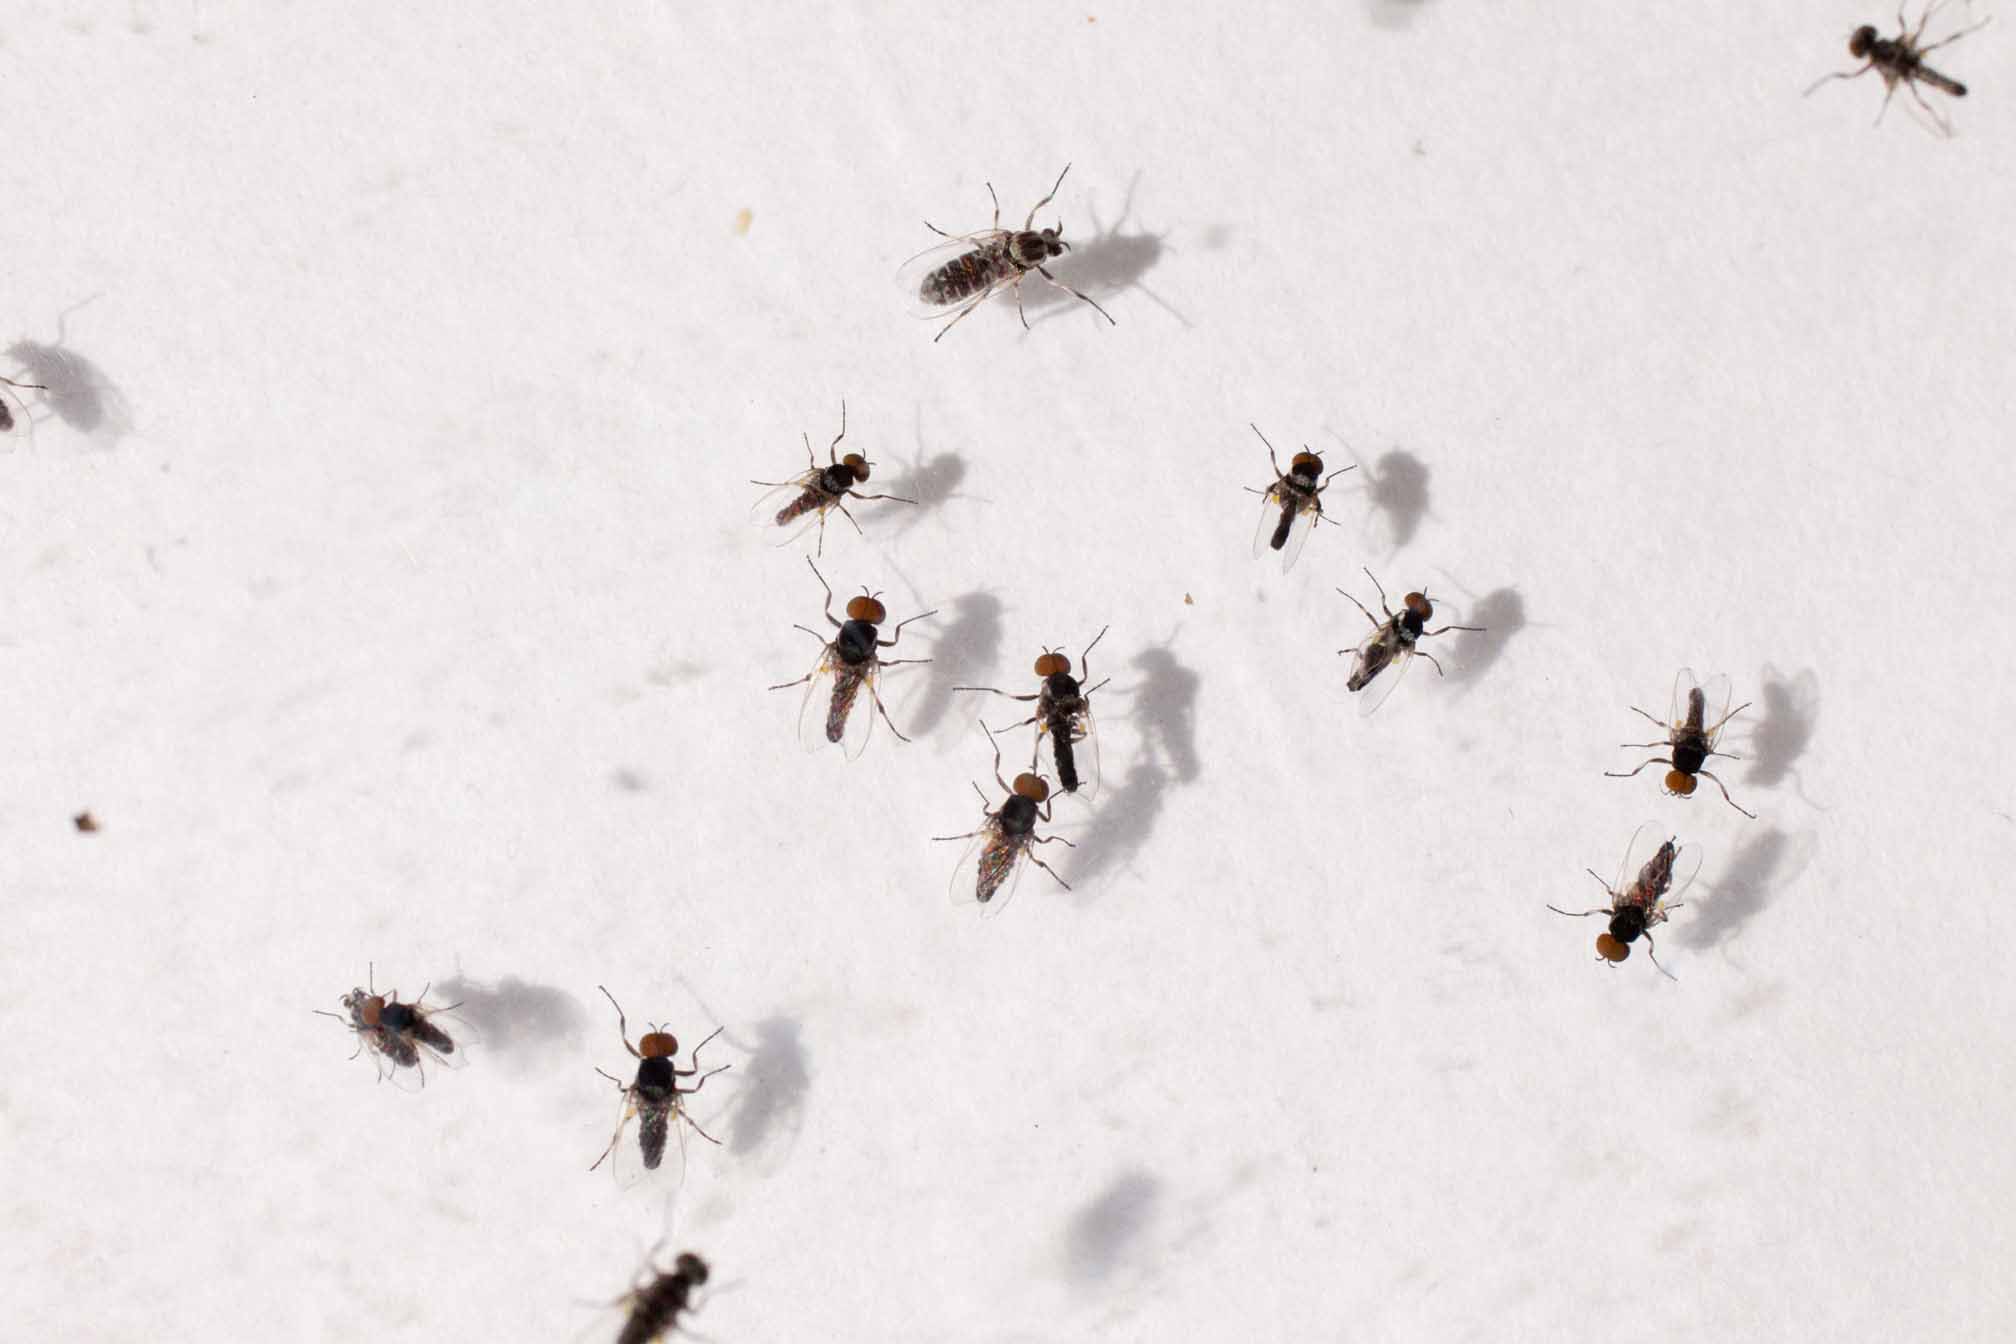 A group of black flies